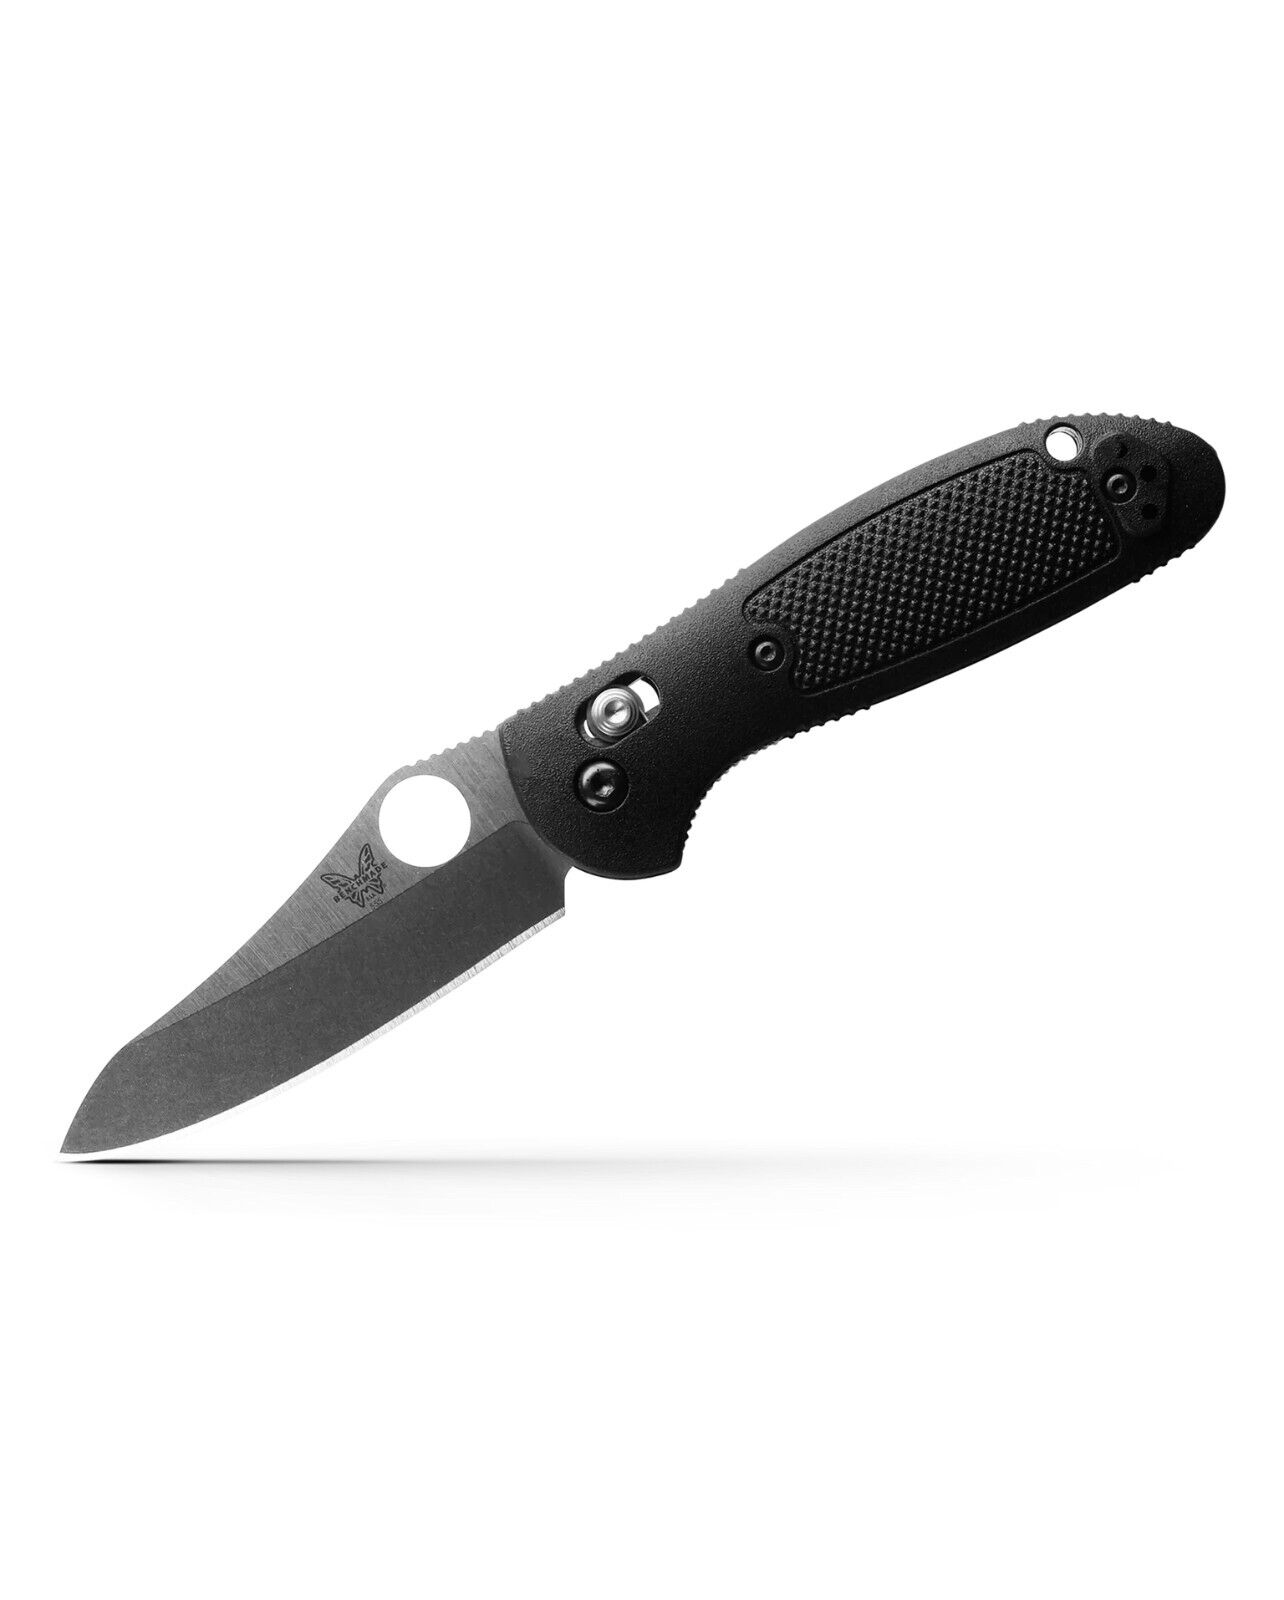 Benchmade 555-S30V Mini Griptilian Knife